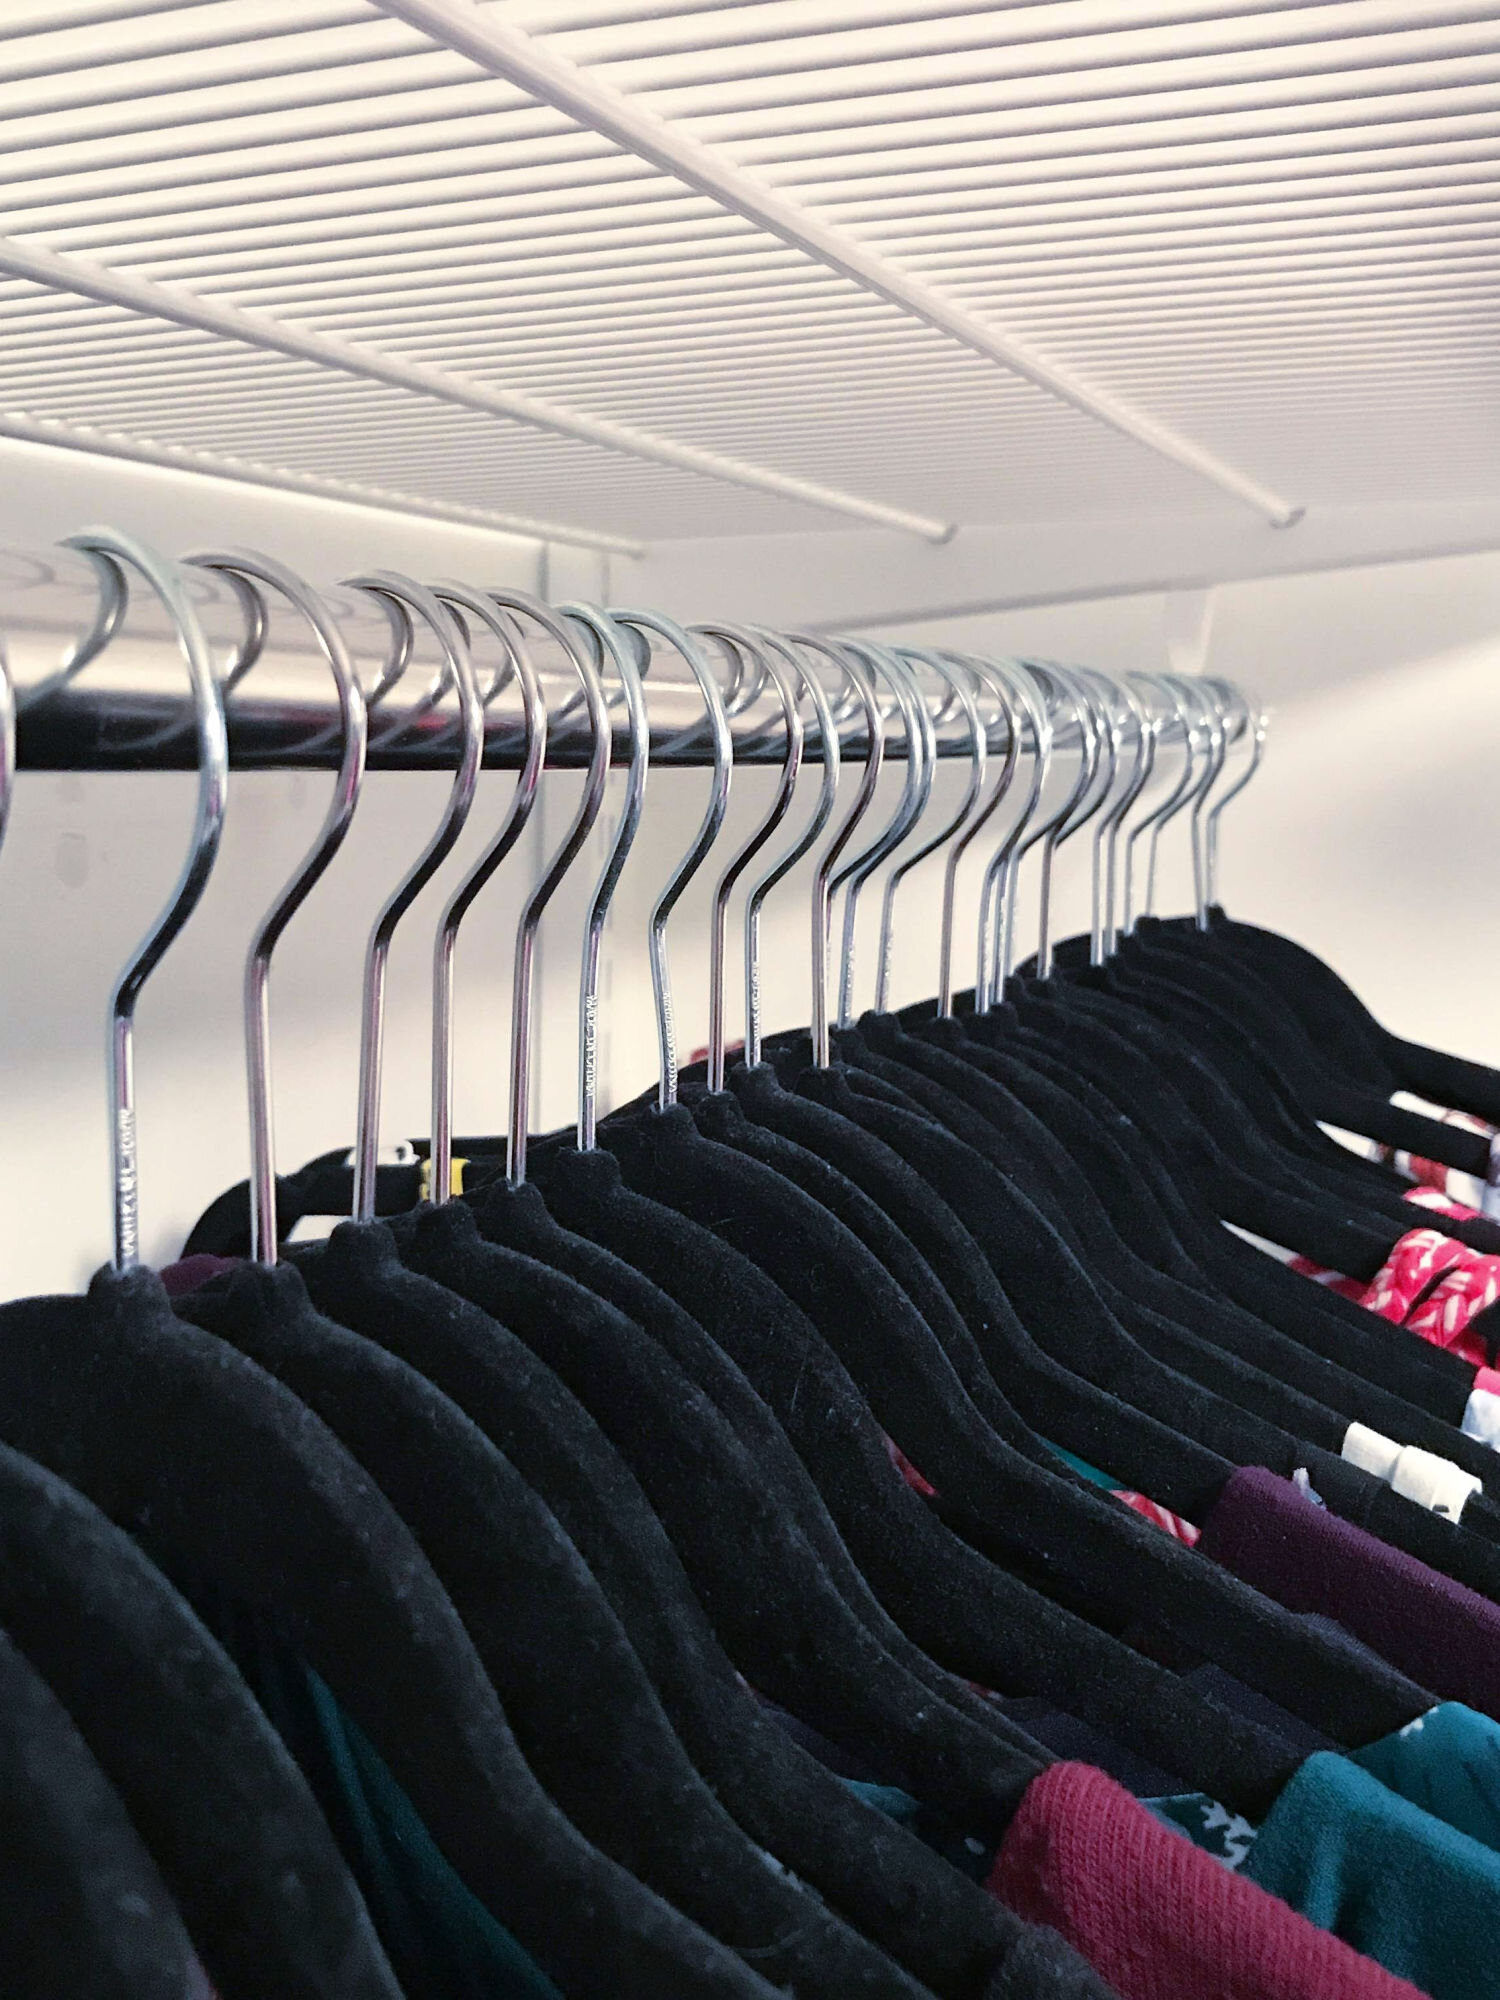 closet-hangers.jpg